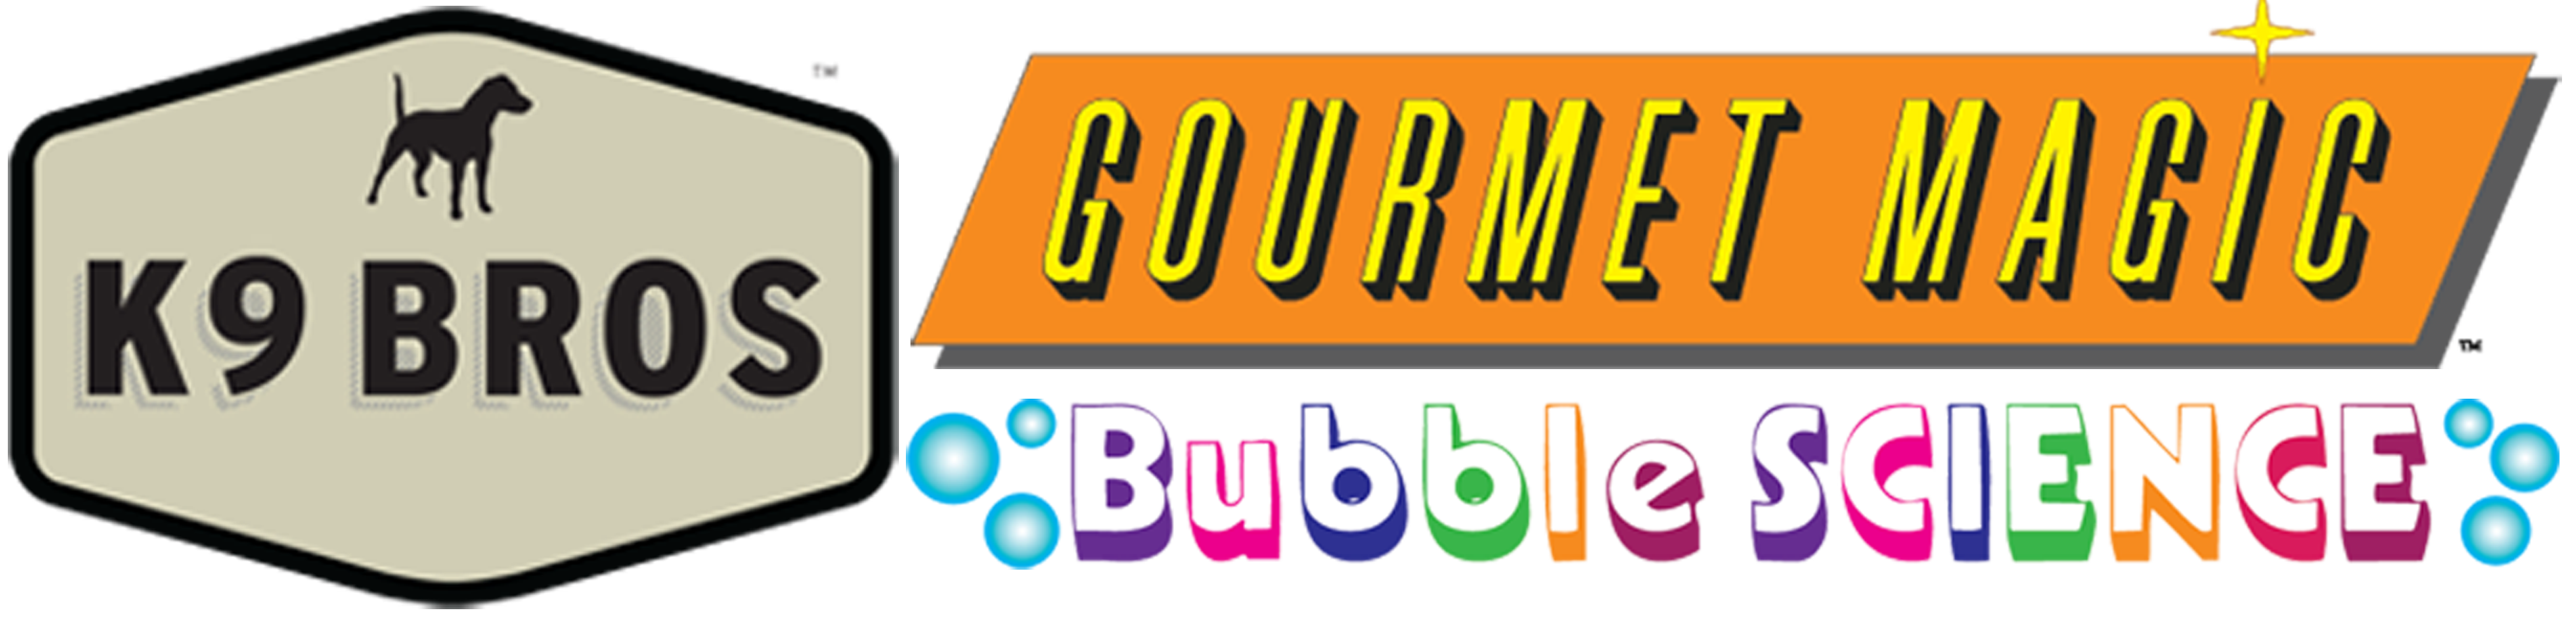 K9 Bros ★ Gourmet Magic ★ Bubble Science